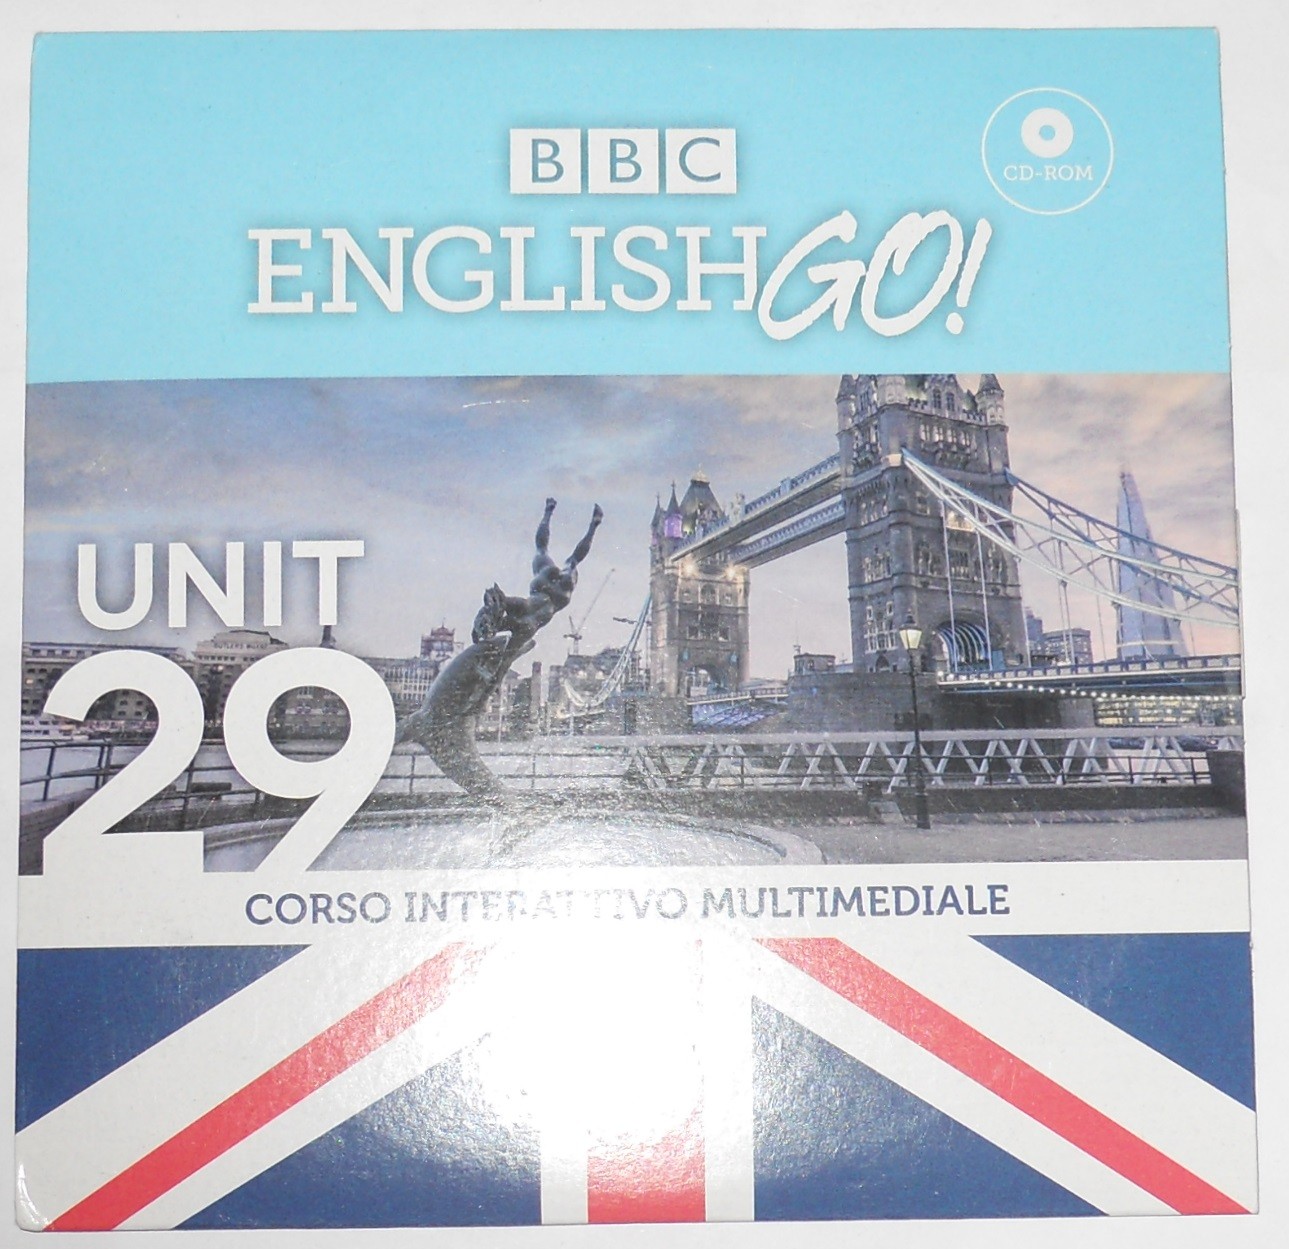 BBC English GO! vol 29